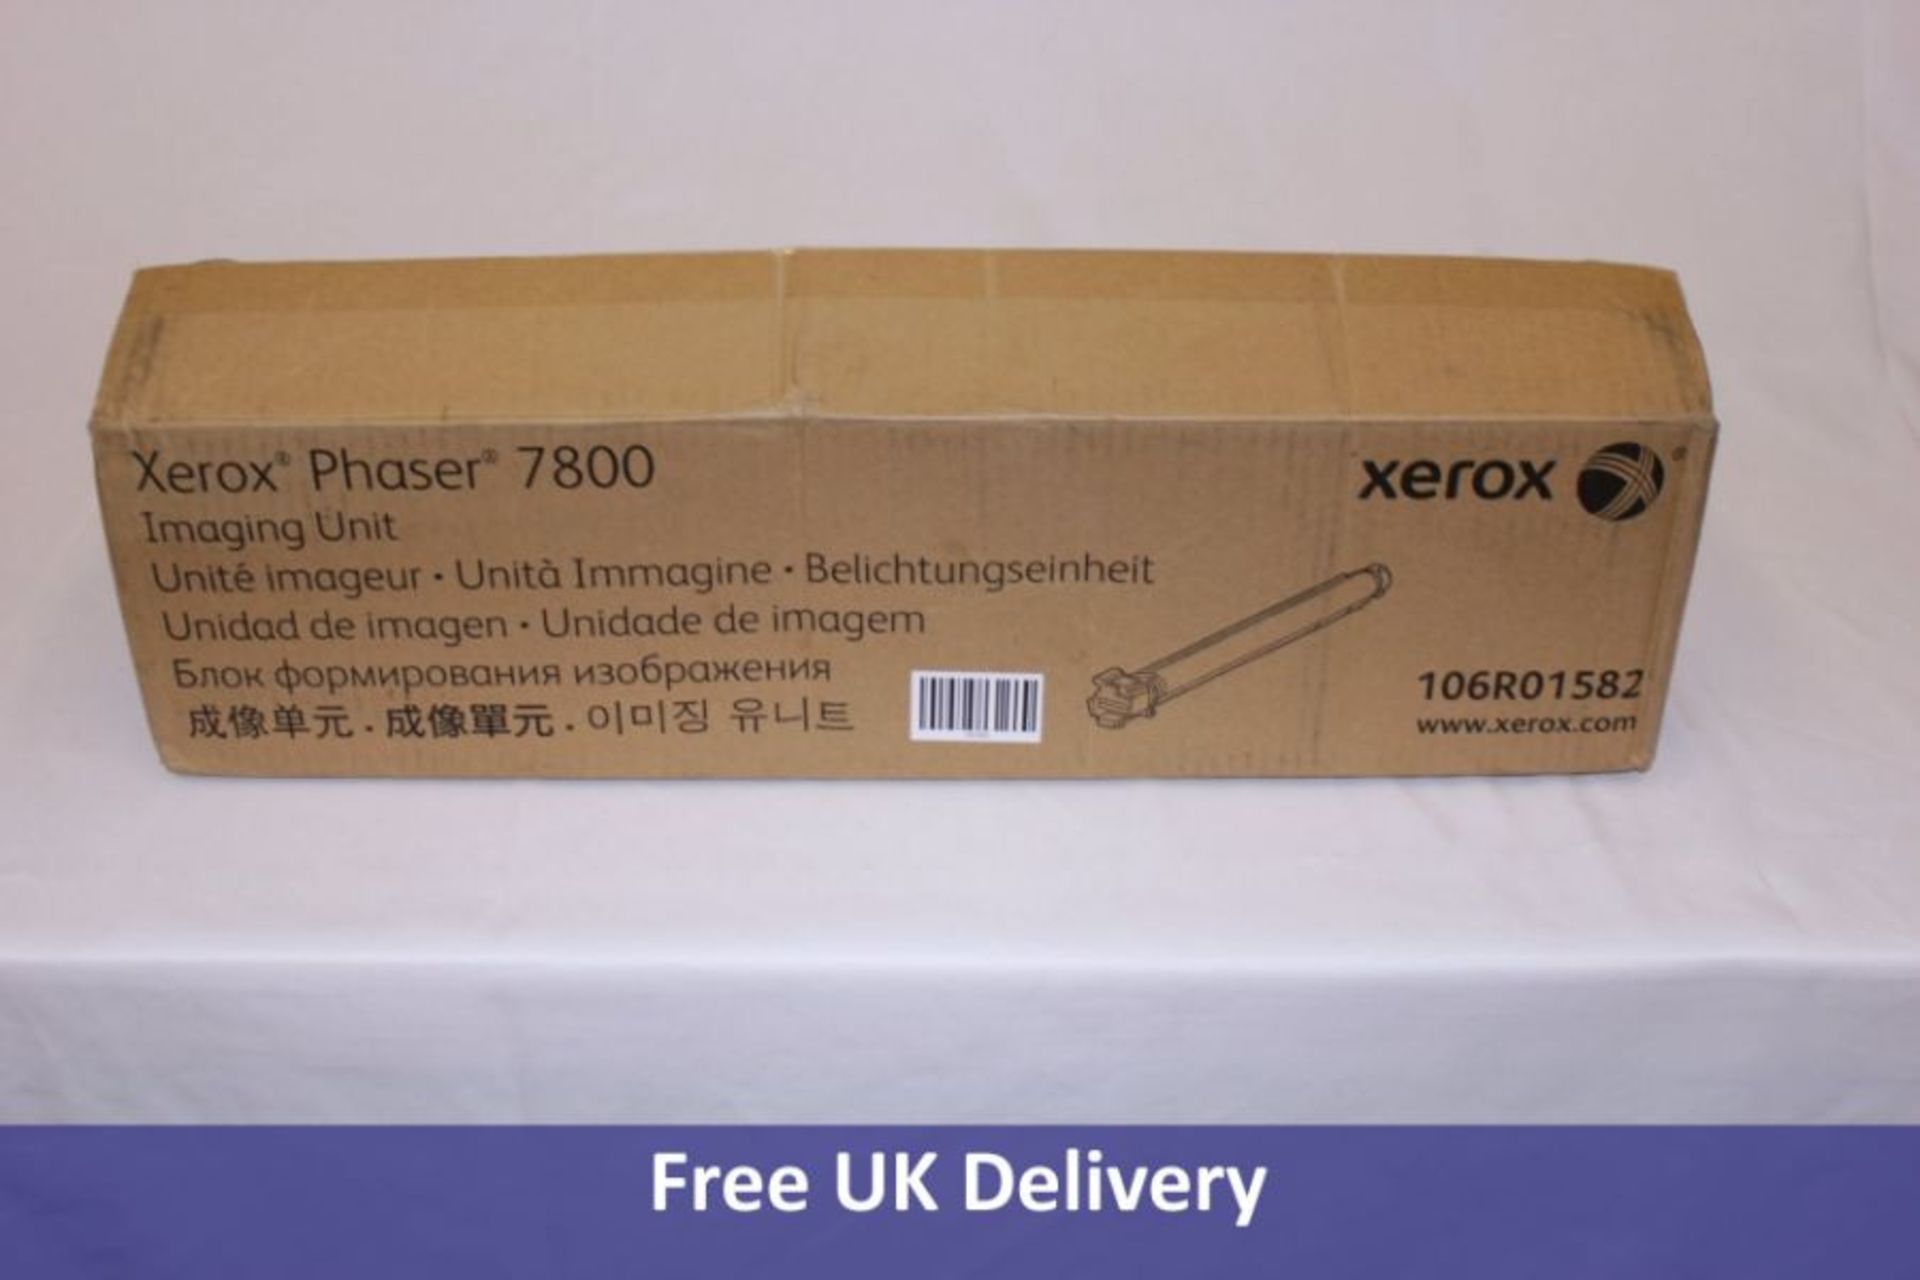 Xerox Phaser 7800 Imaging Unit